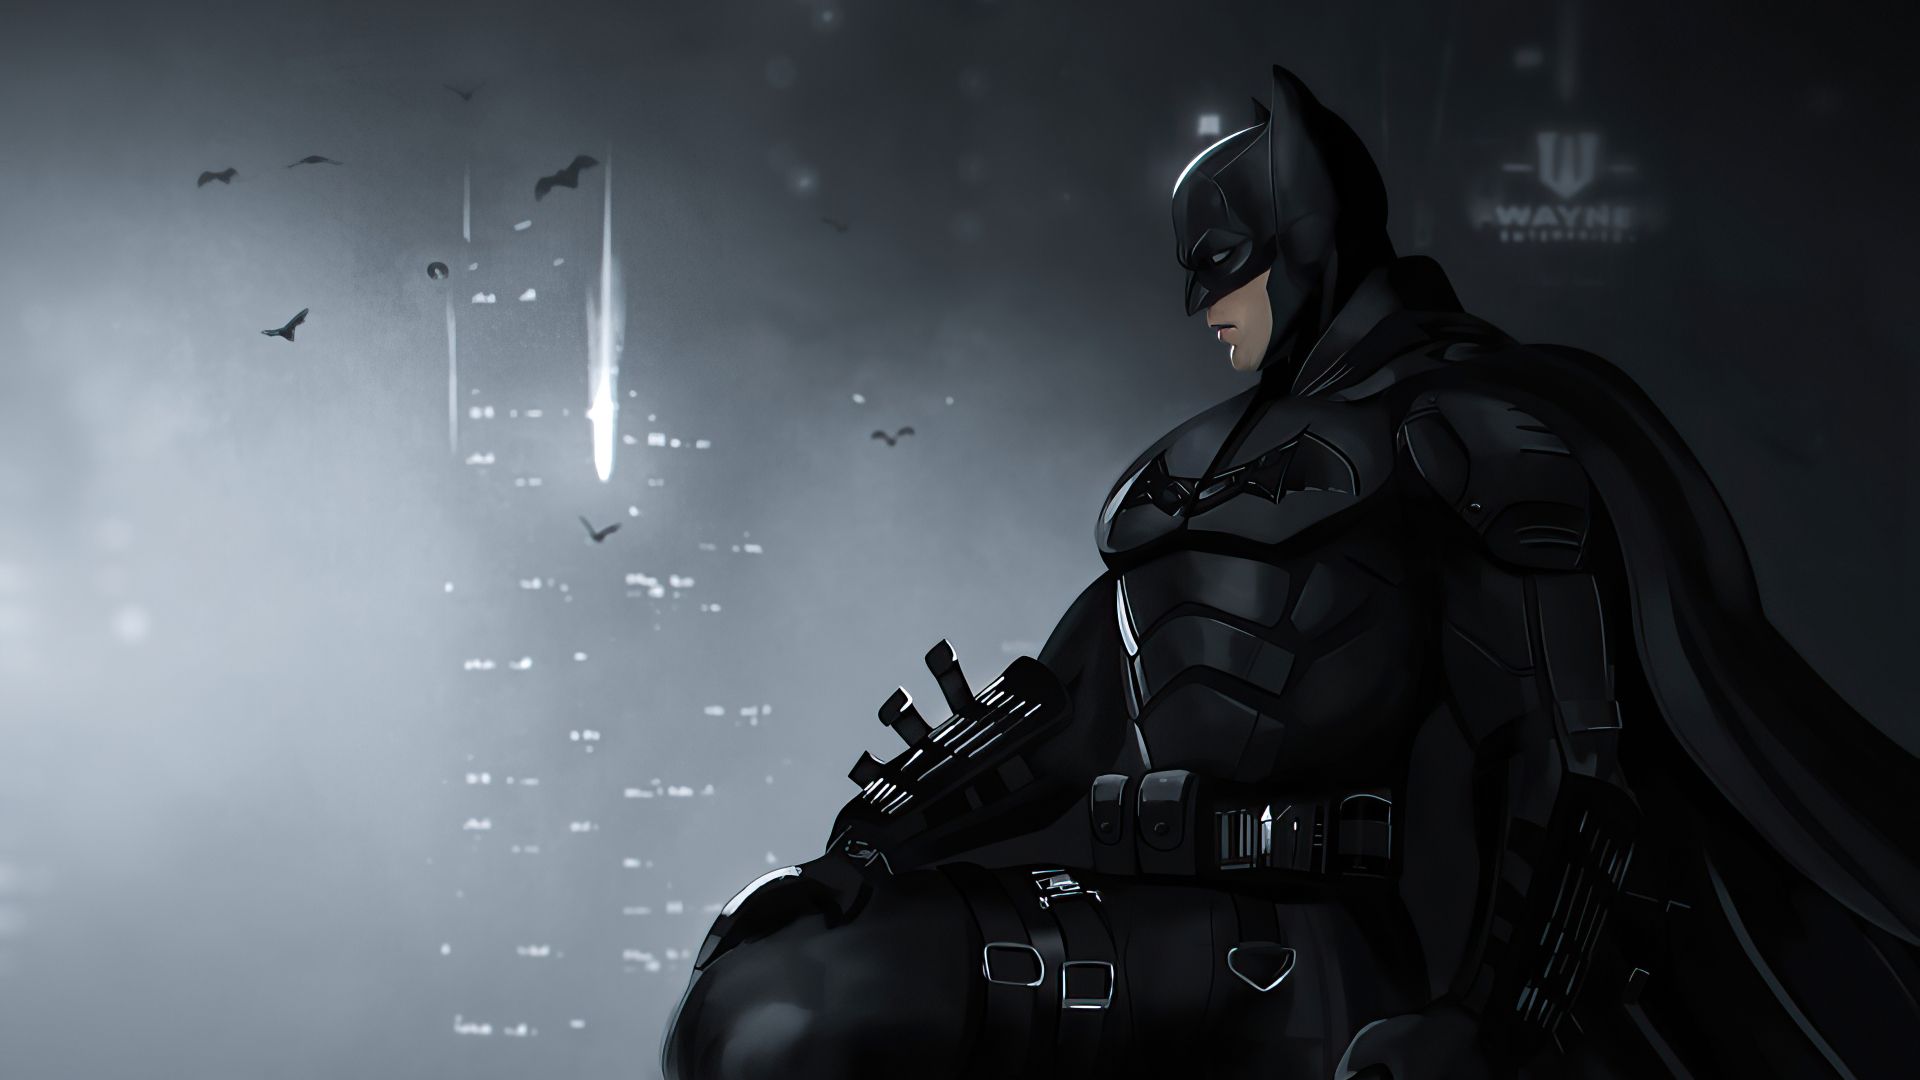 New Batman 2021 1080P Laptop Full HD Wallpaper, HD Superheroes 4K Wallpaper, Image, Photo and Background